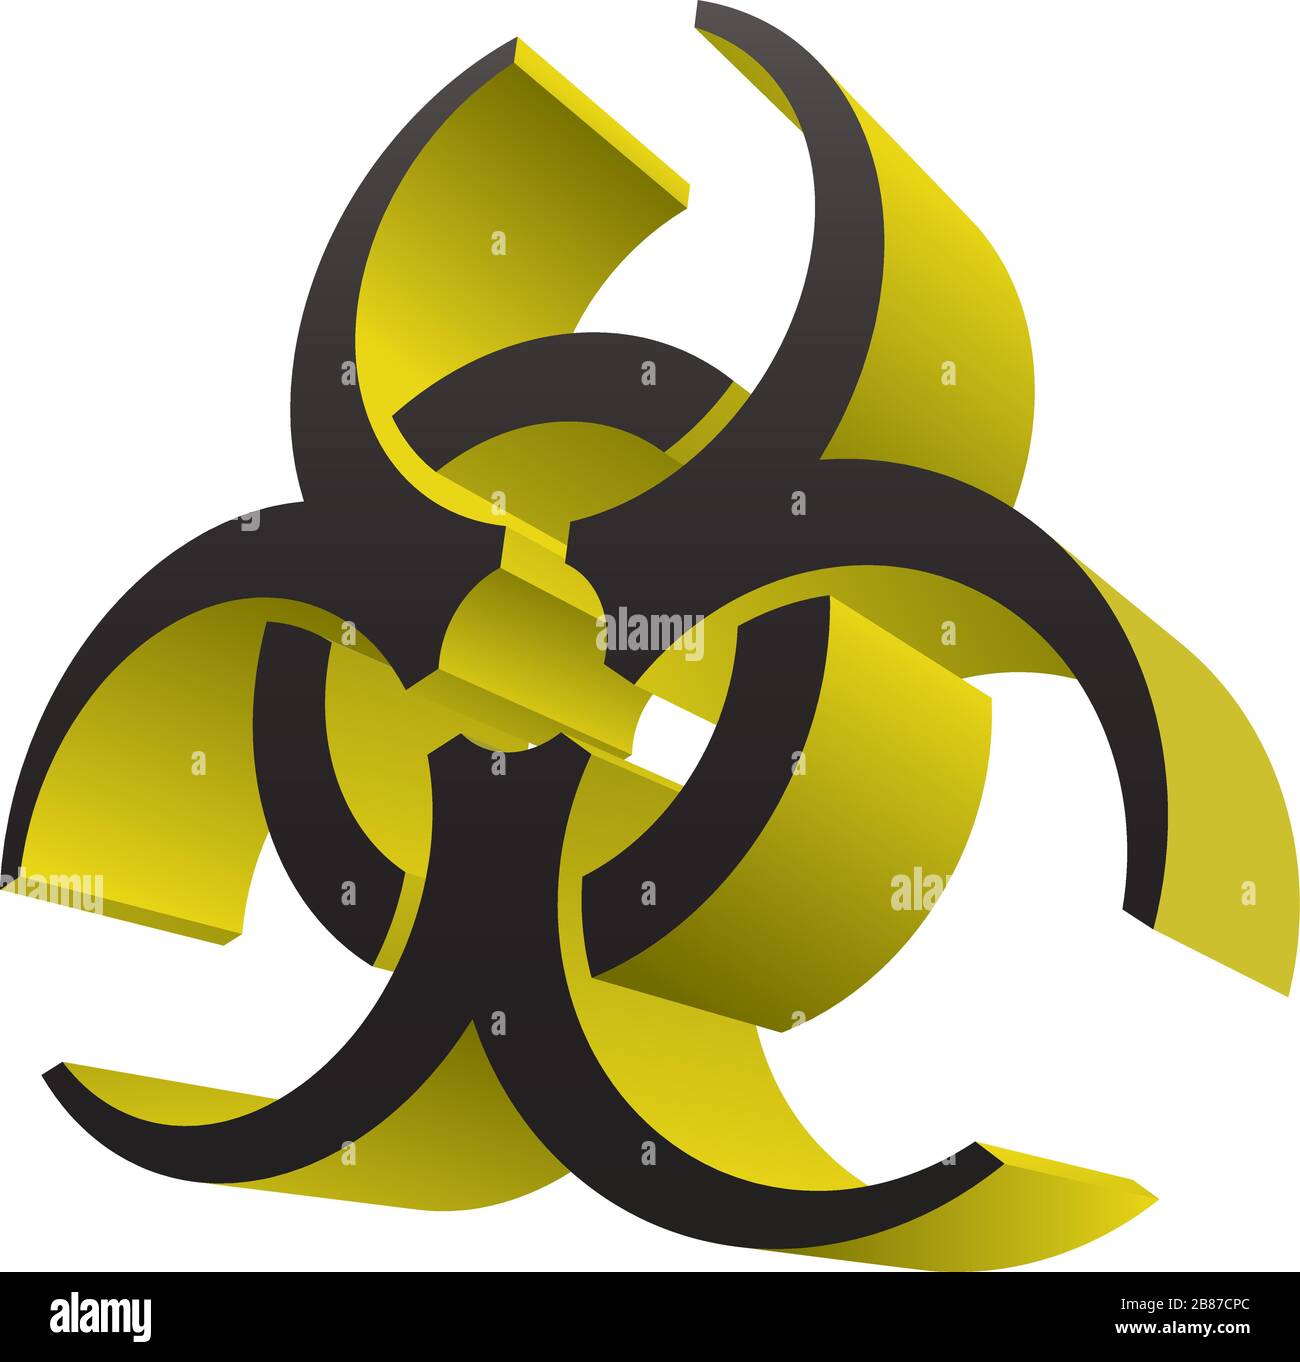 Biohazard Health Medical Warning 3D Symbol Isolated Vector Illustration (Illustrazione vettoriale isolata simbolo 3D) Illustrazione Vettoriale